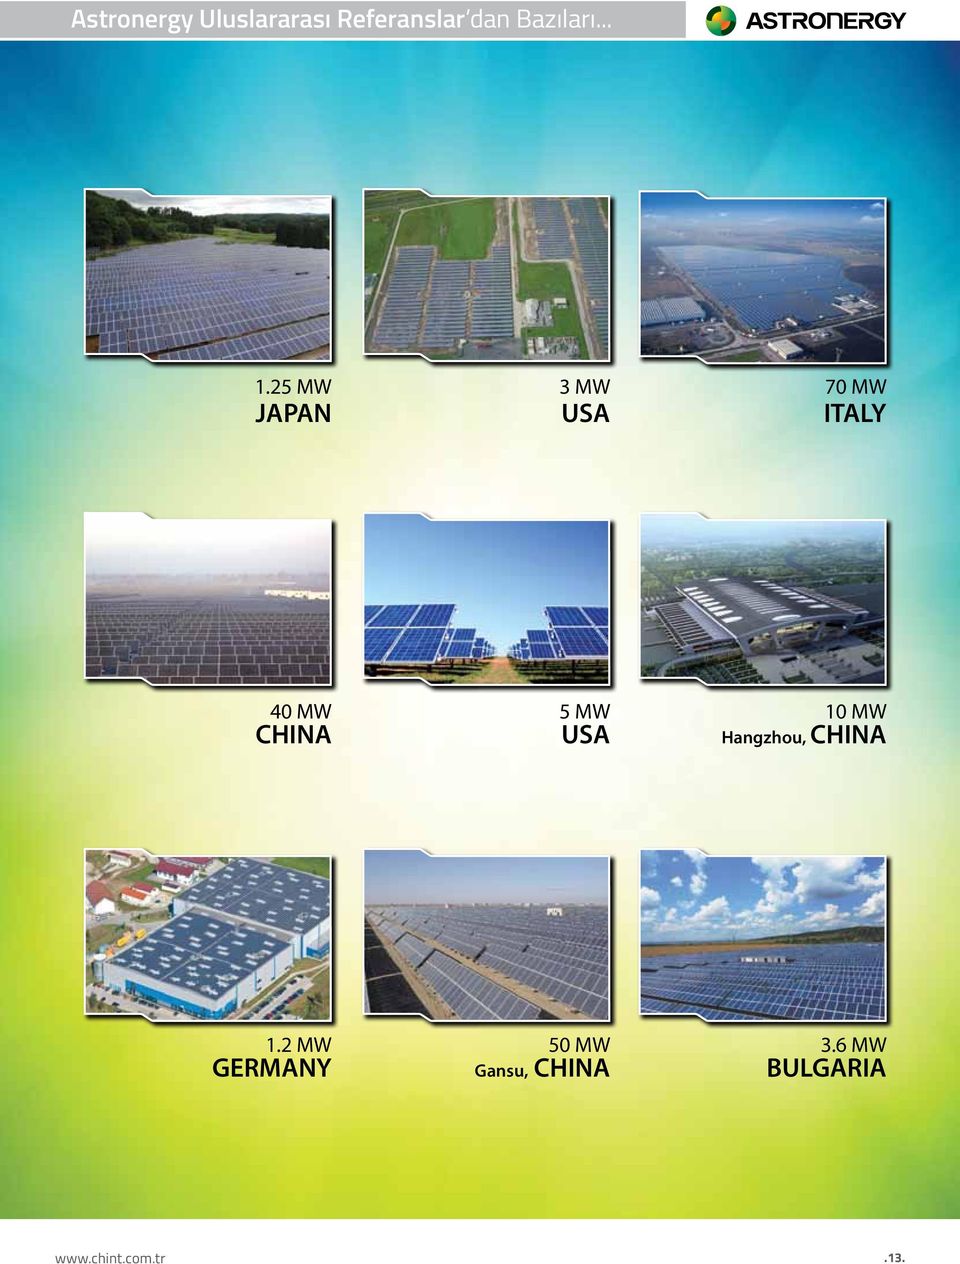 5 MW USA 10 MW Hangzhou, CHINA 1.